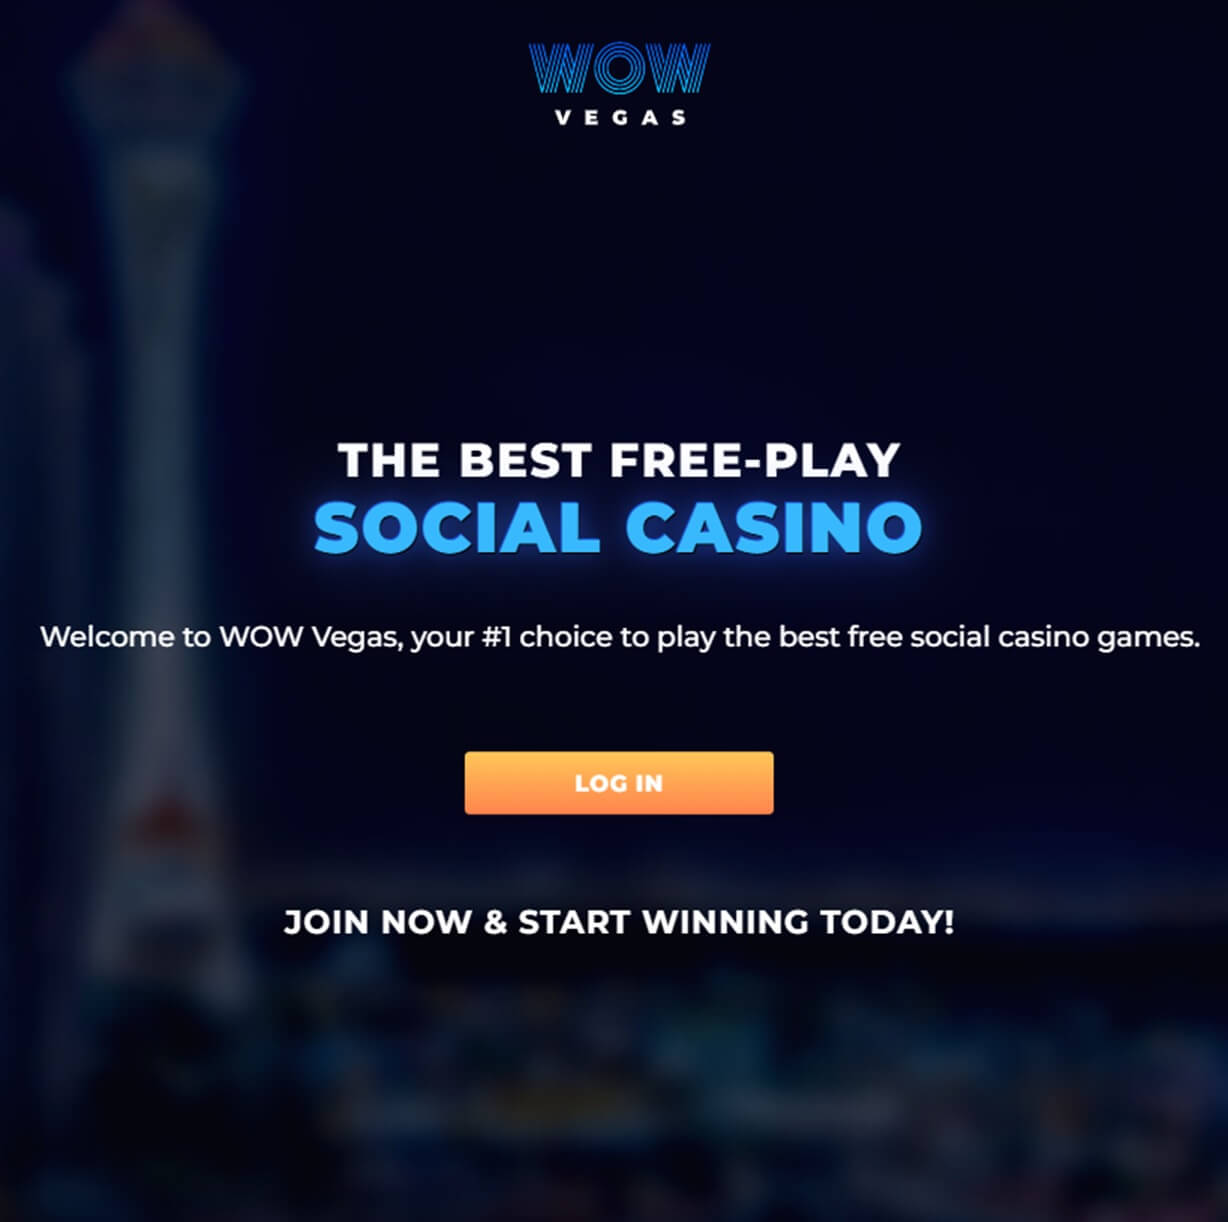 WOW Vegas Casino - Best Free-Play Social Casino